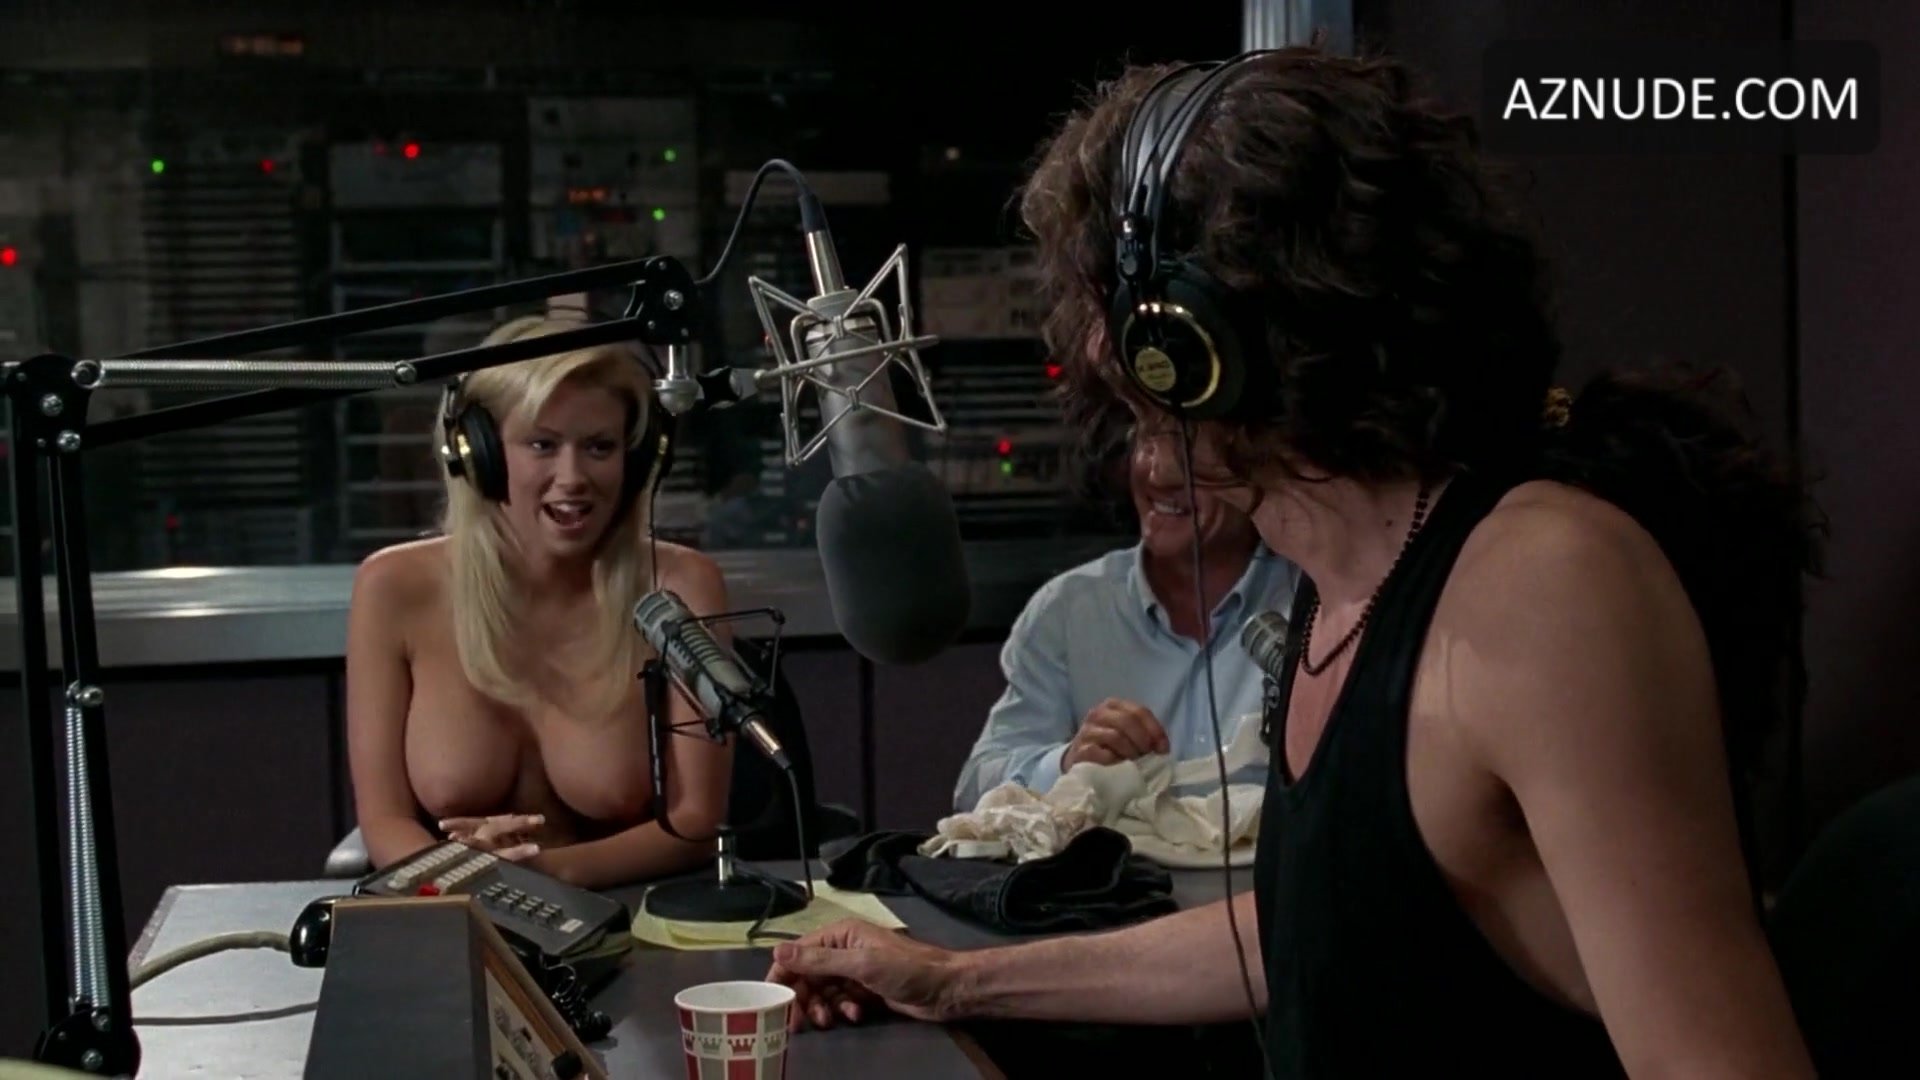 Naked lady in the radio studio.